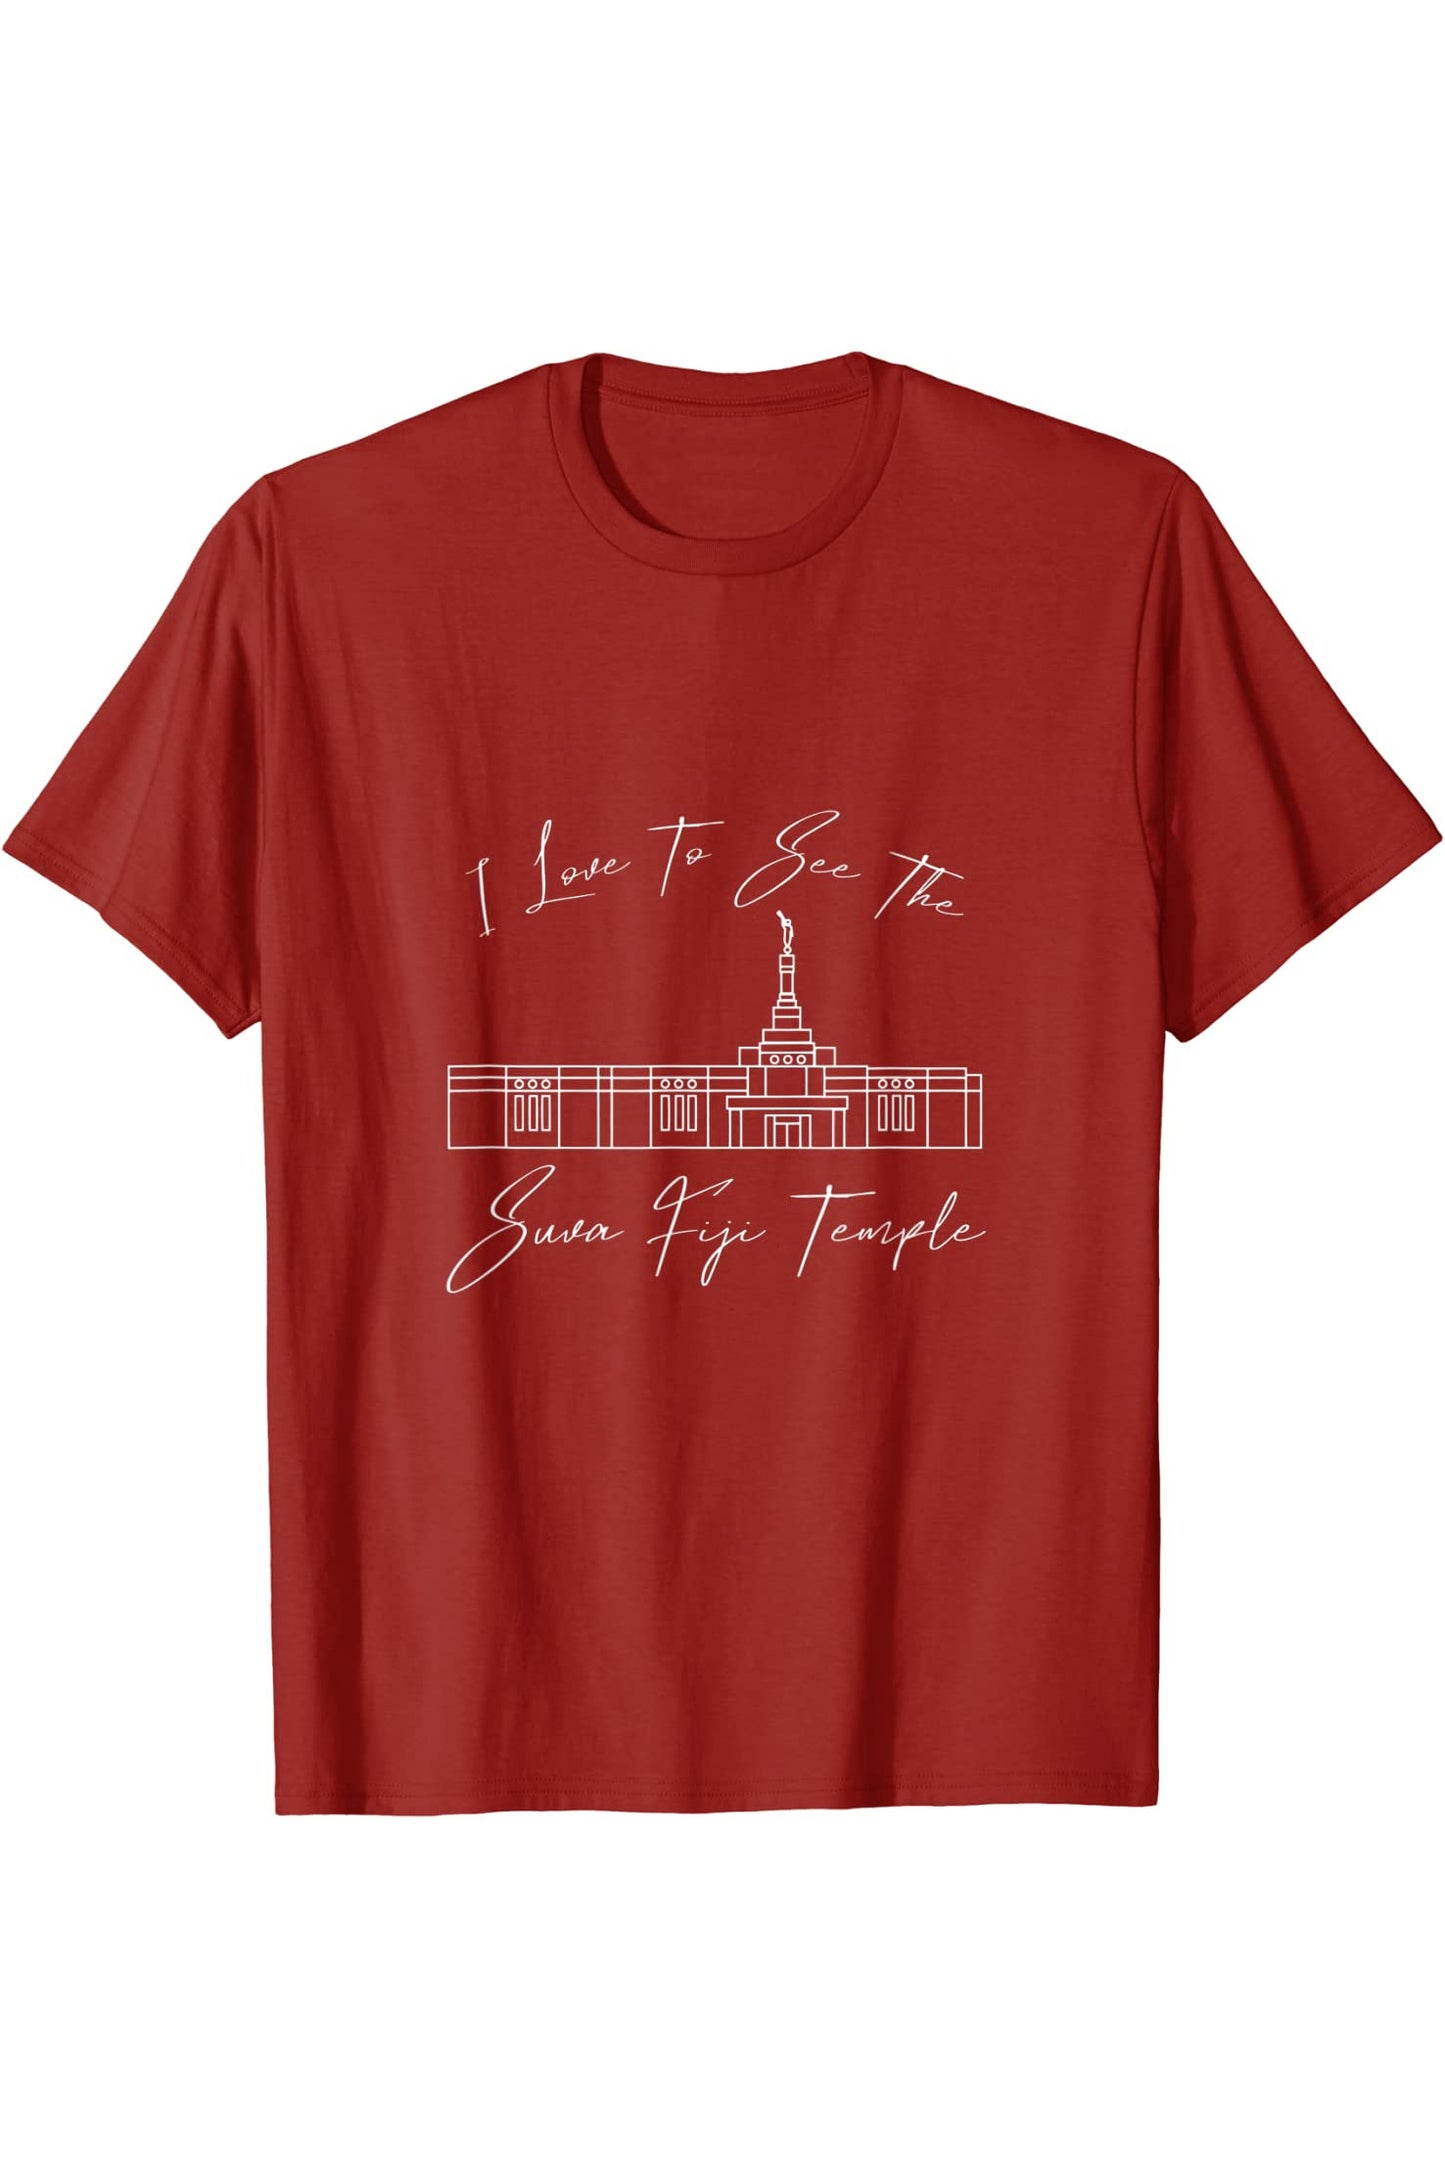 Suva Fiji Temple T-Shirt - Calligraphy Style (English) US